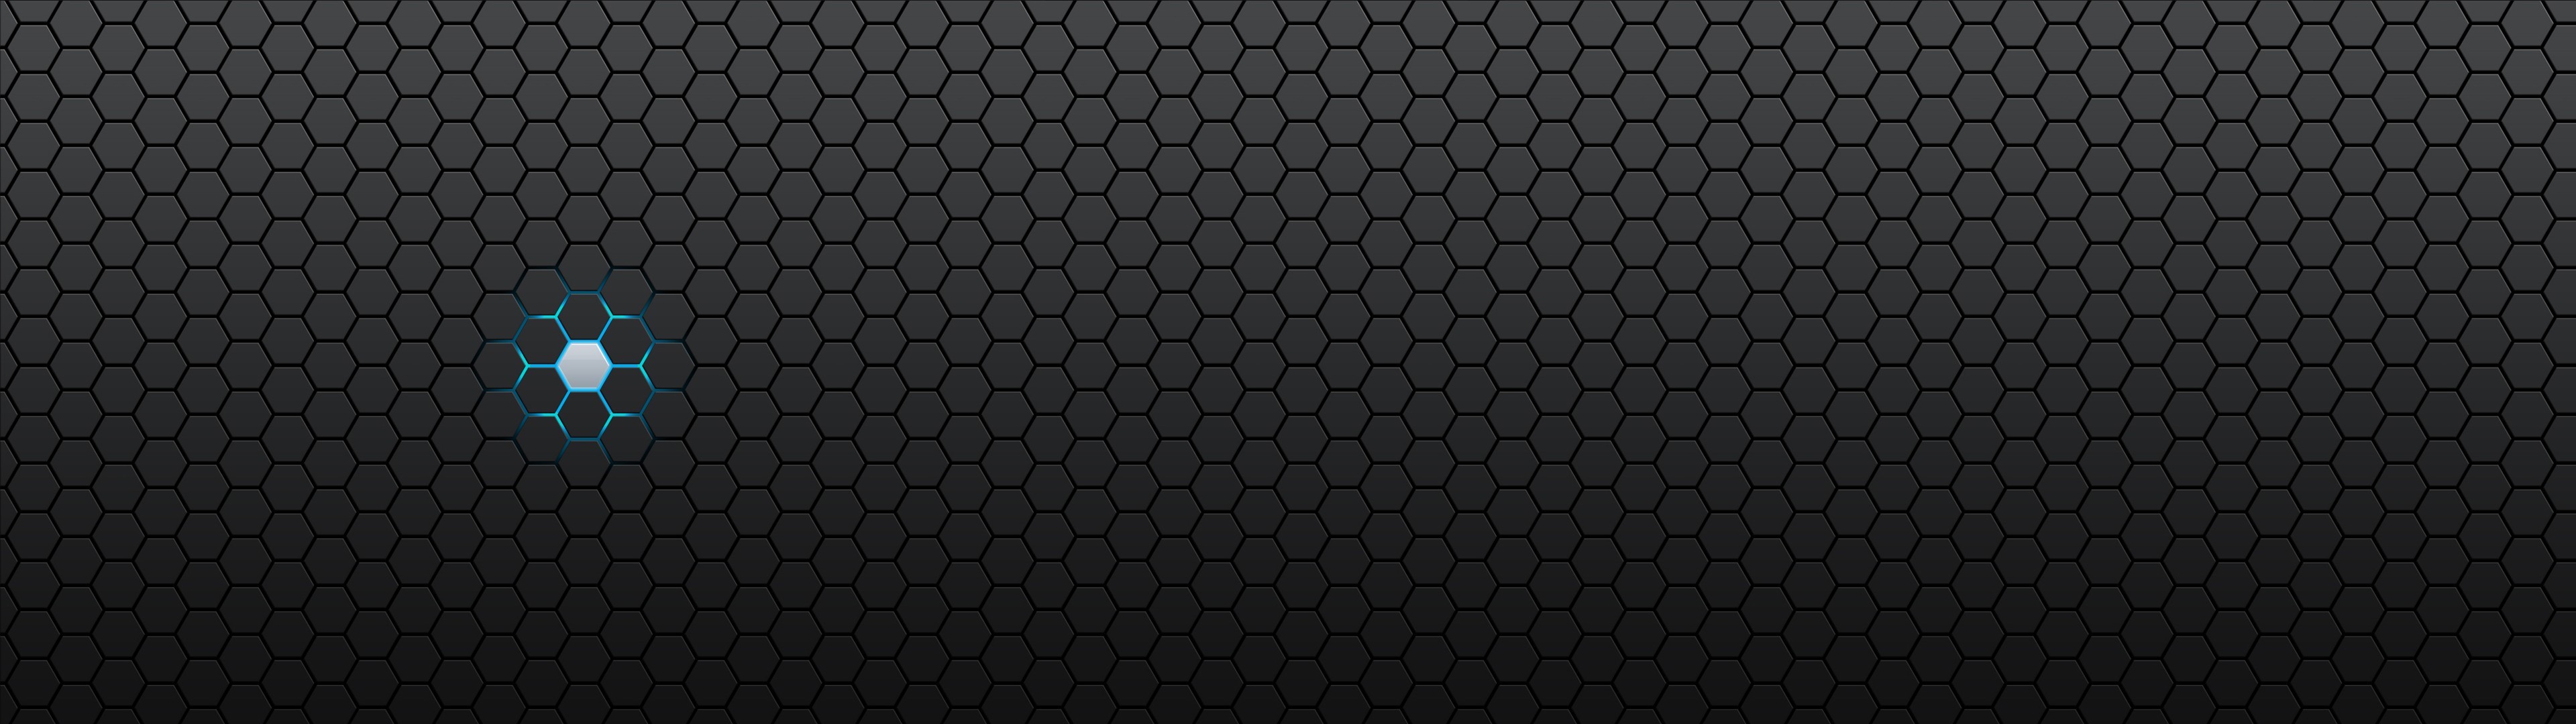 General 3840x1080 minimalism hexagon abstract digital art pattern selective coloring texture